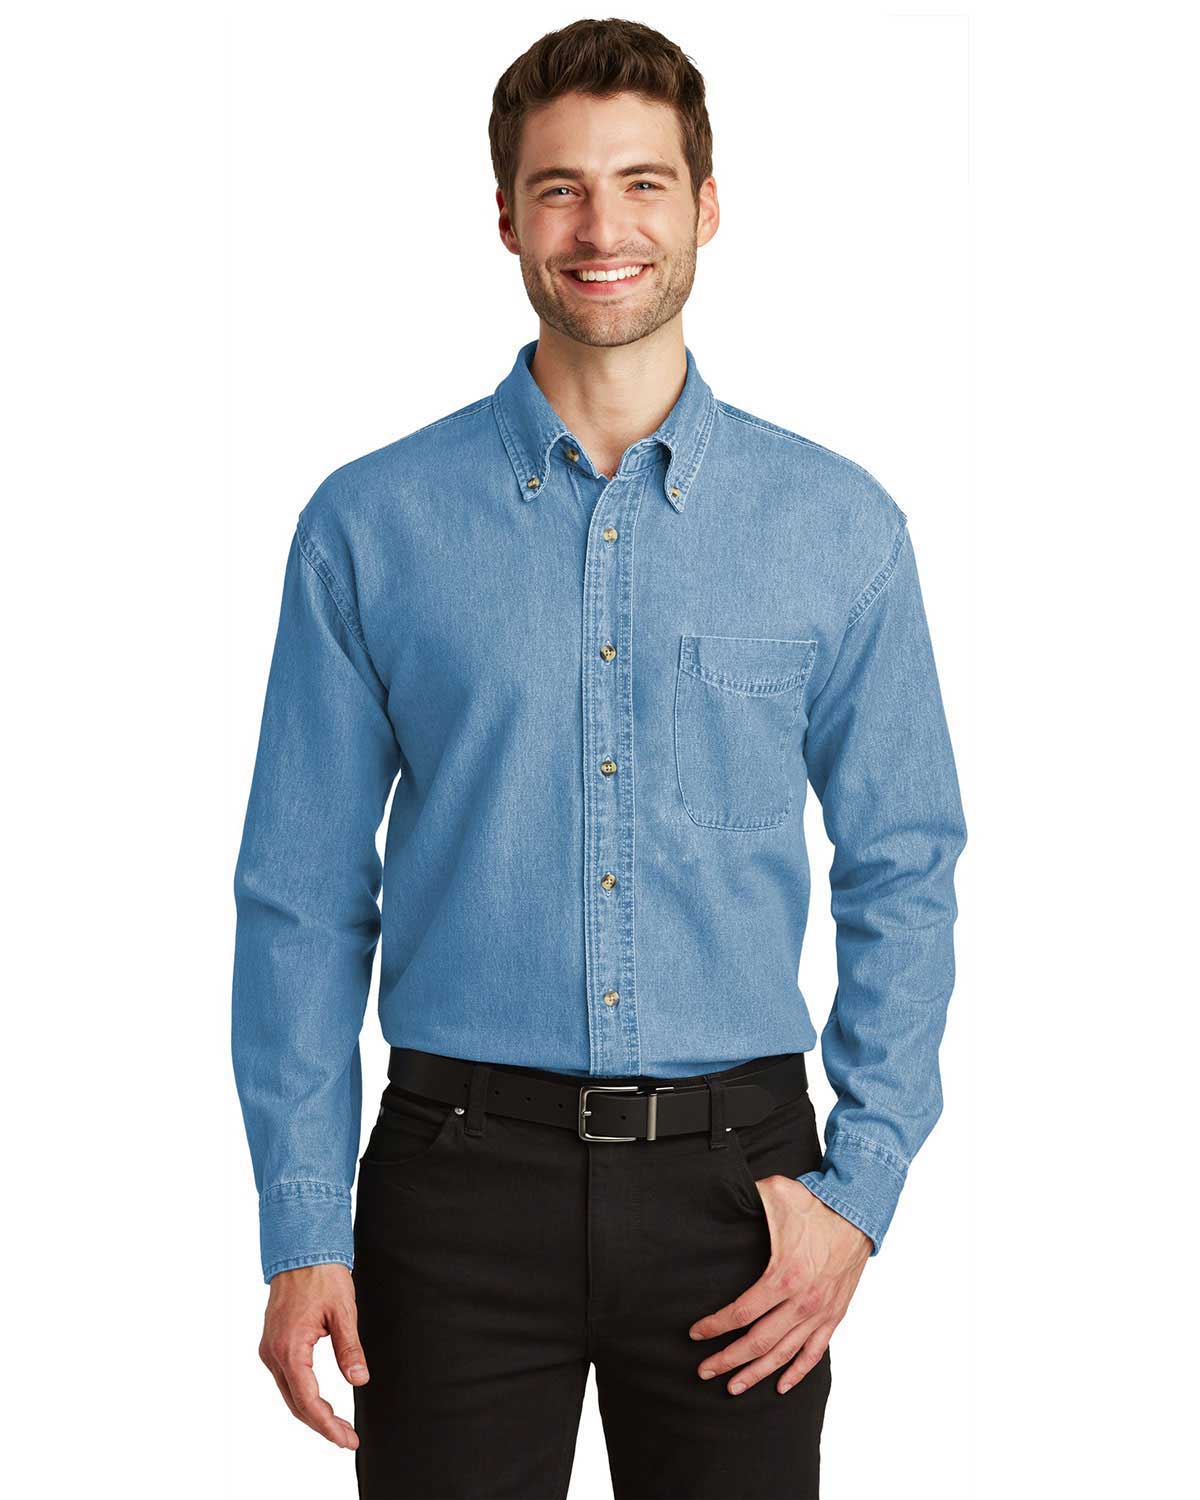 Port Authority S600 Adult Long-Sleeve Denim Shirt at Apparelstation